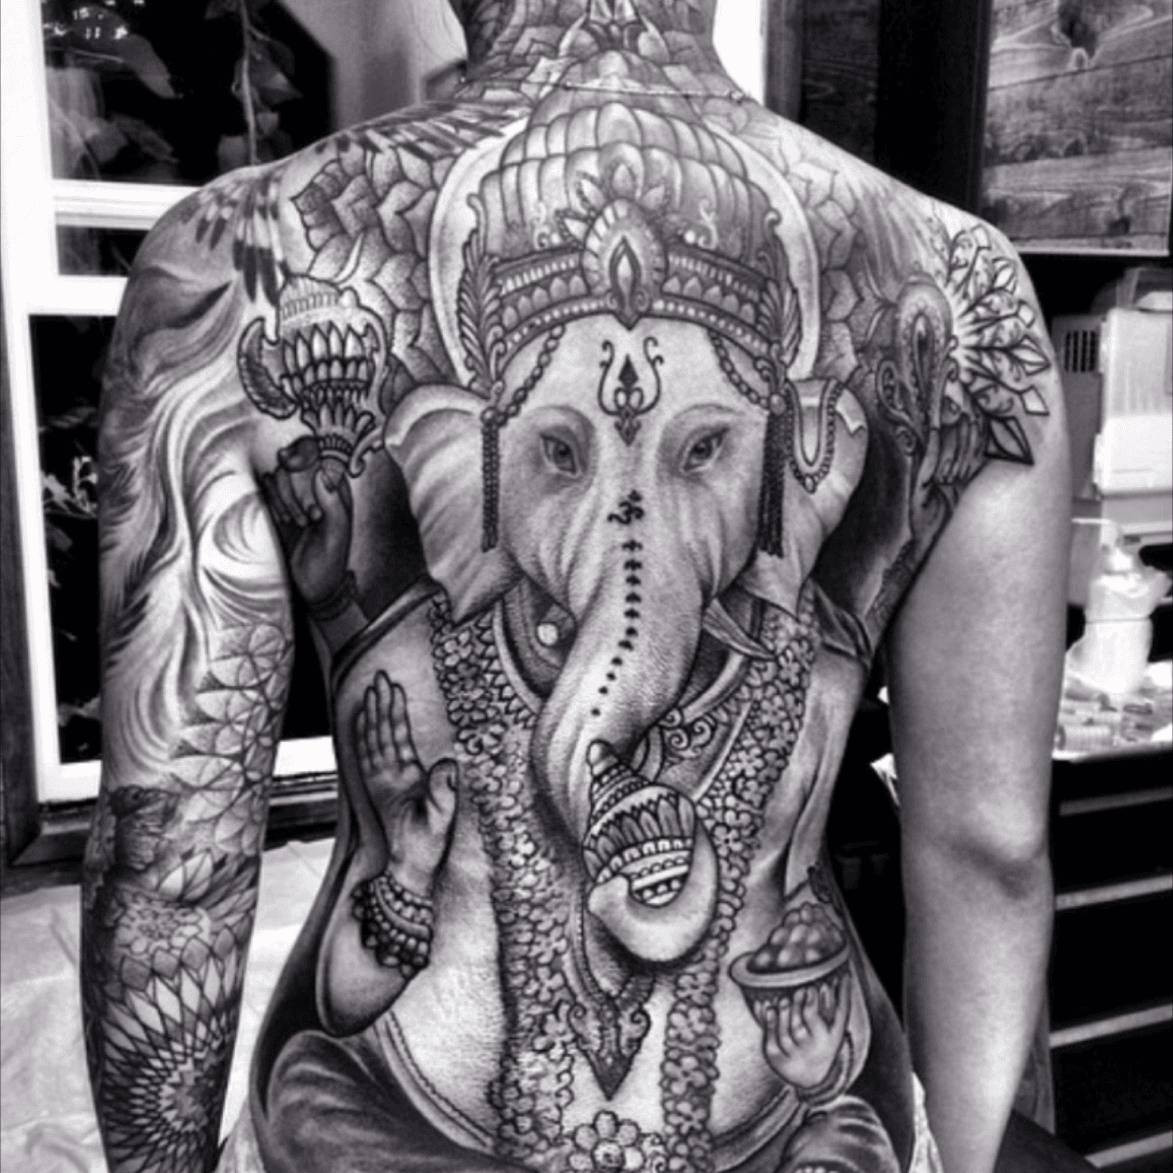 Bodysuit by Jason Butcher : Tattoos